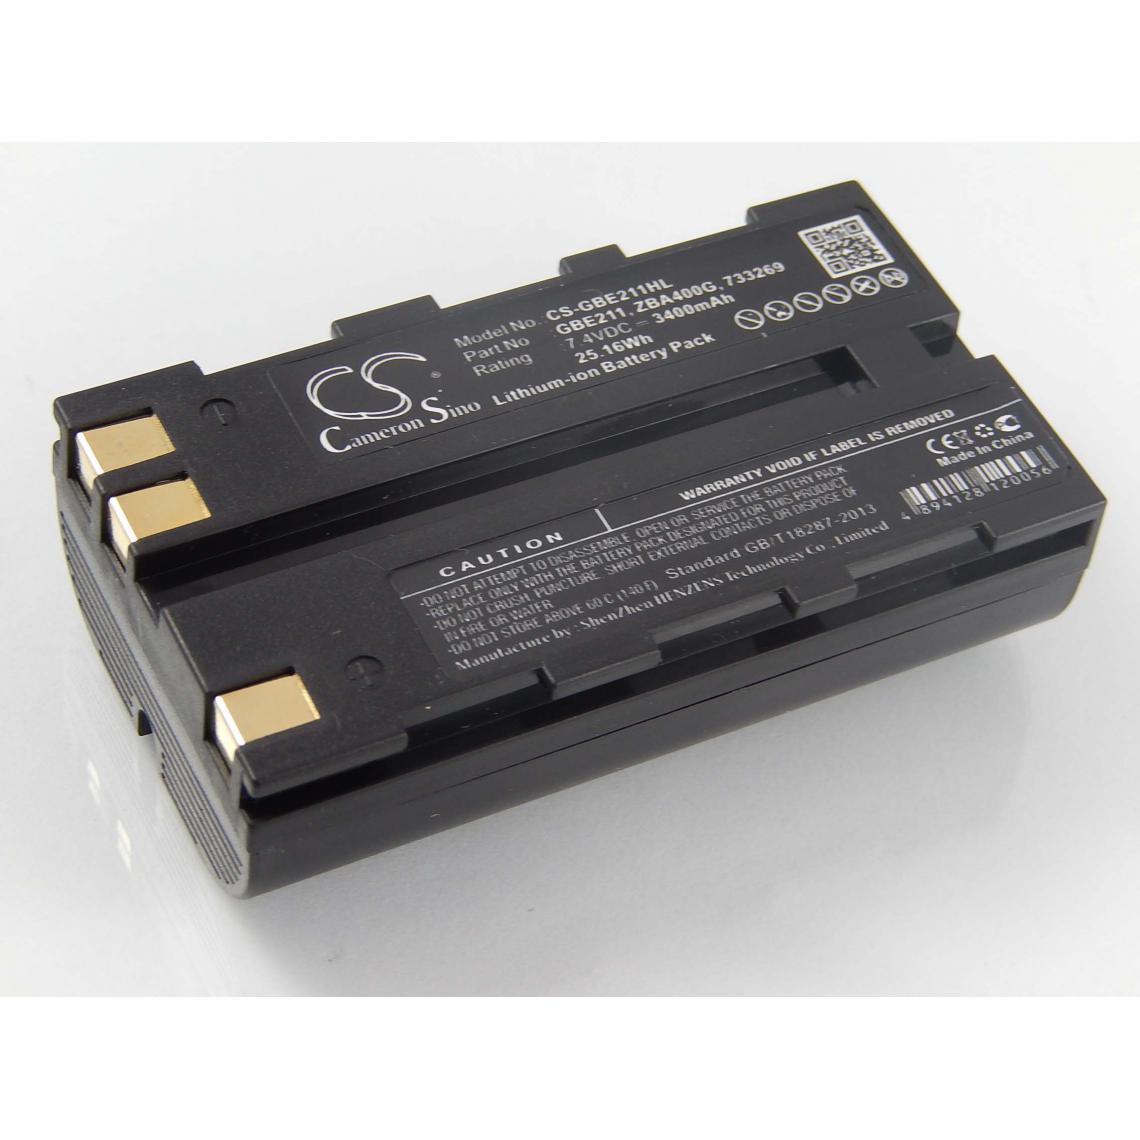 Vhbw - vhbw Batterie compatible avec Leica Piper 100, 100 Laser, 200 dispositif de mesure laser, outil de mesure (3400mAh, 7,4V, Li-ion) - Piles rechargeables